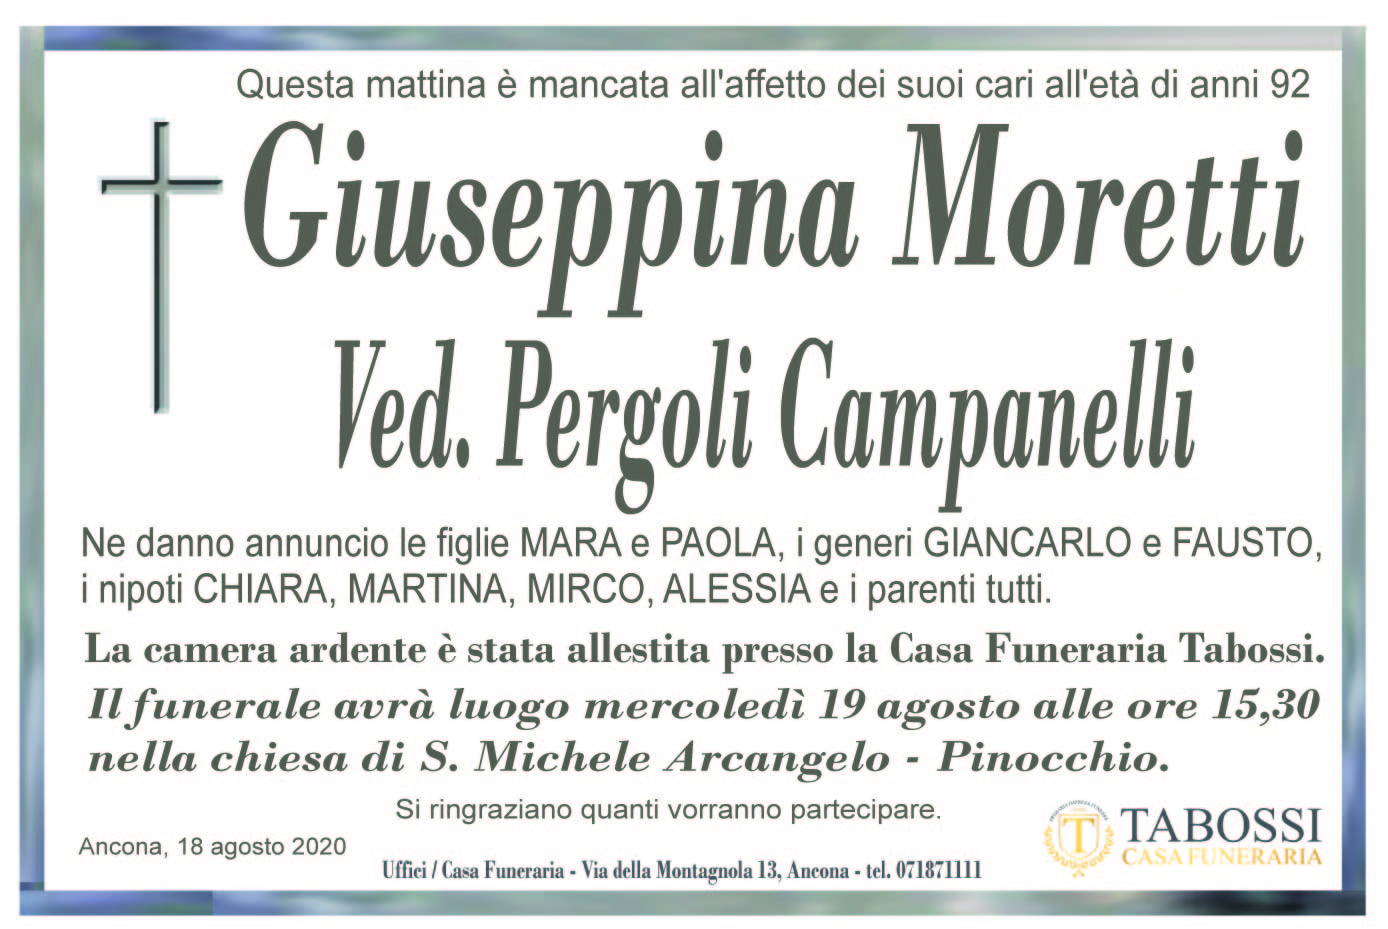 Giuseppina Moretti